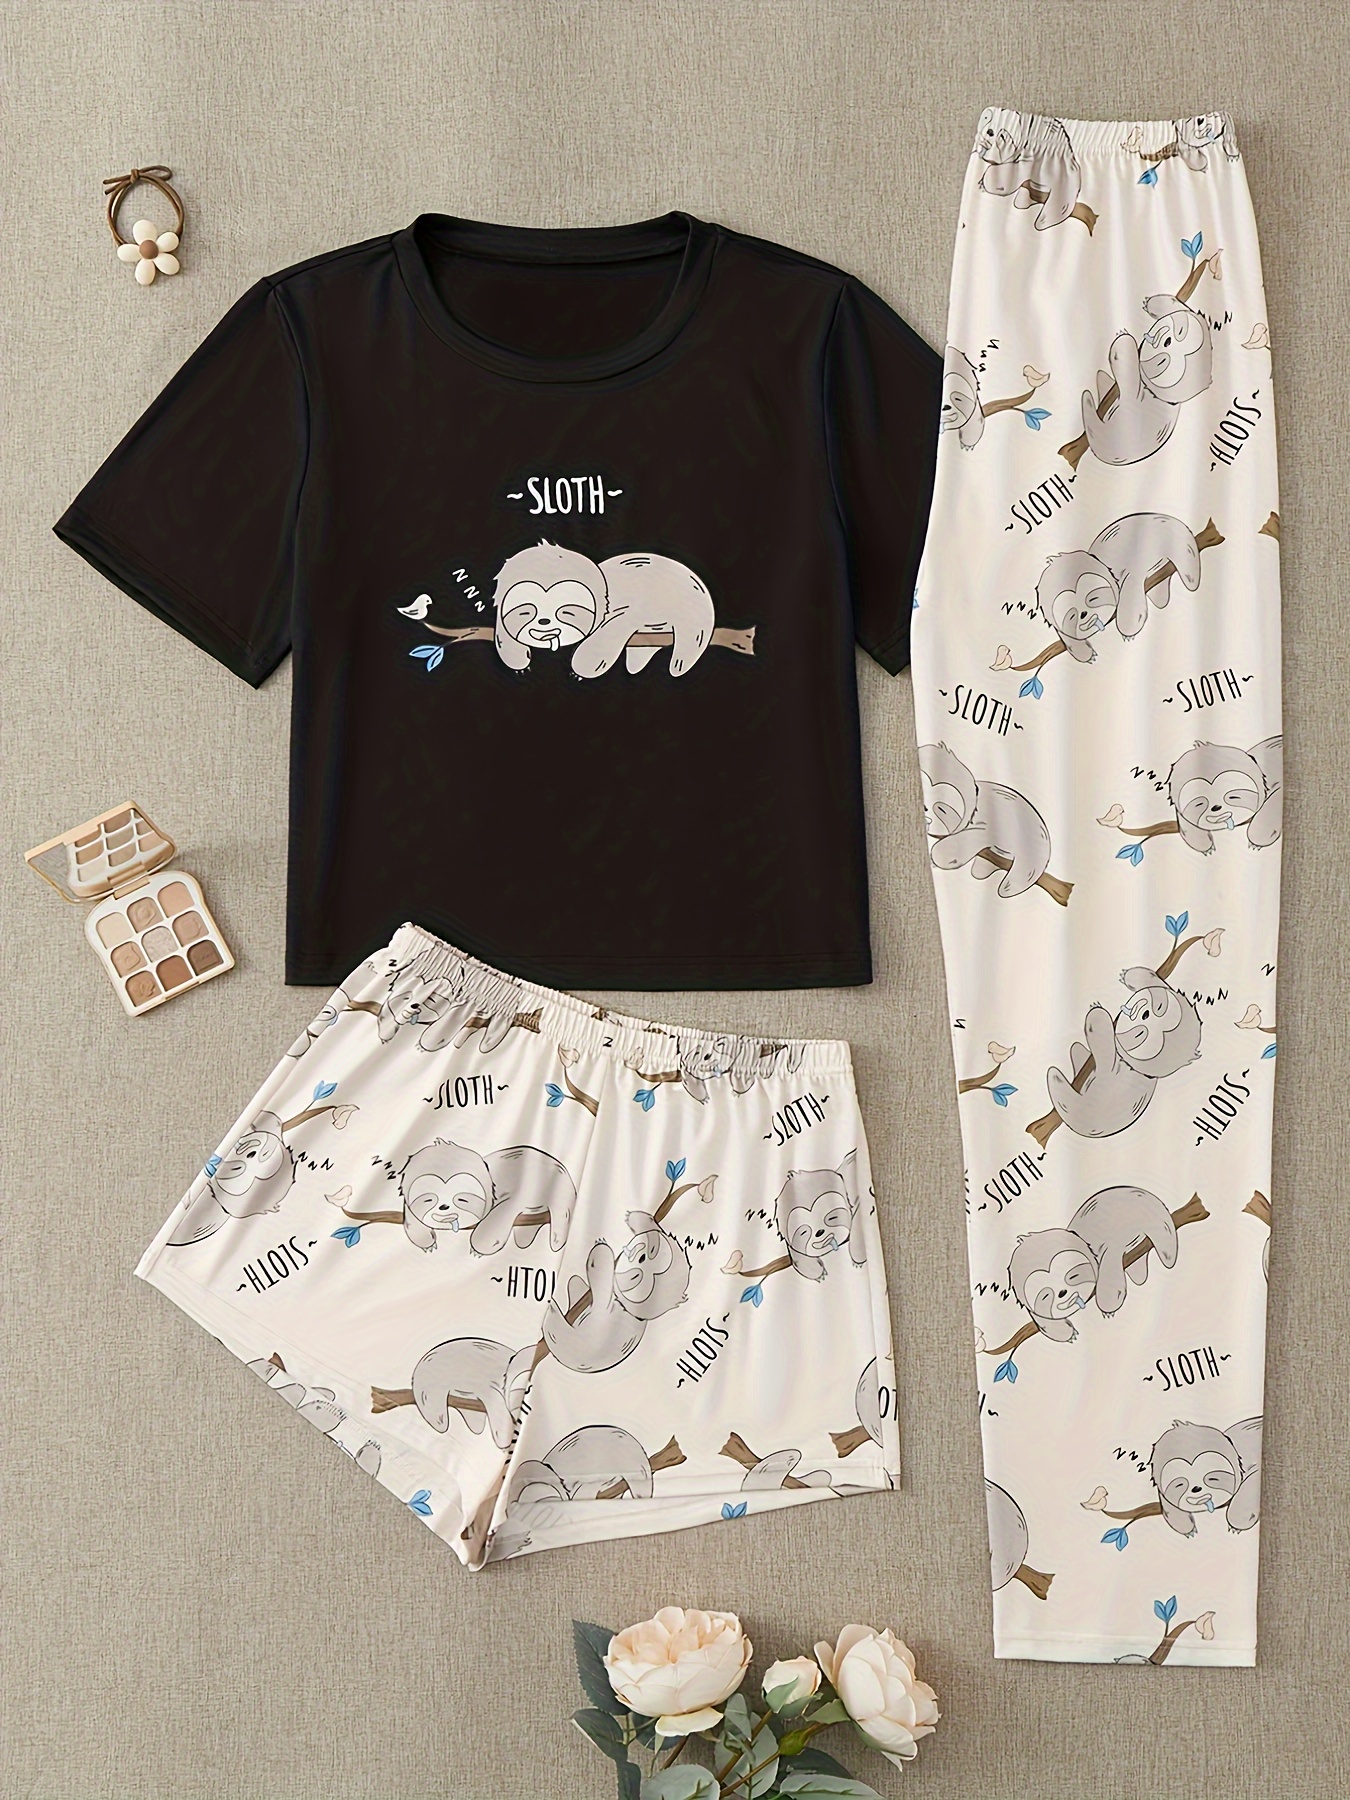 Generic Mudkingdom Boysamp;girls Pajama Set Encanto Animal Printed